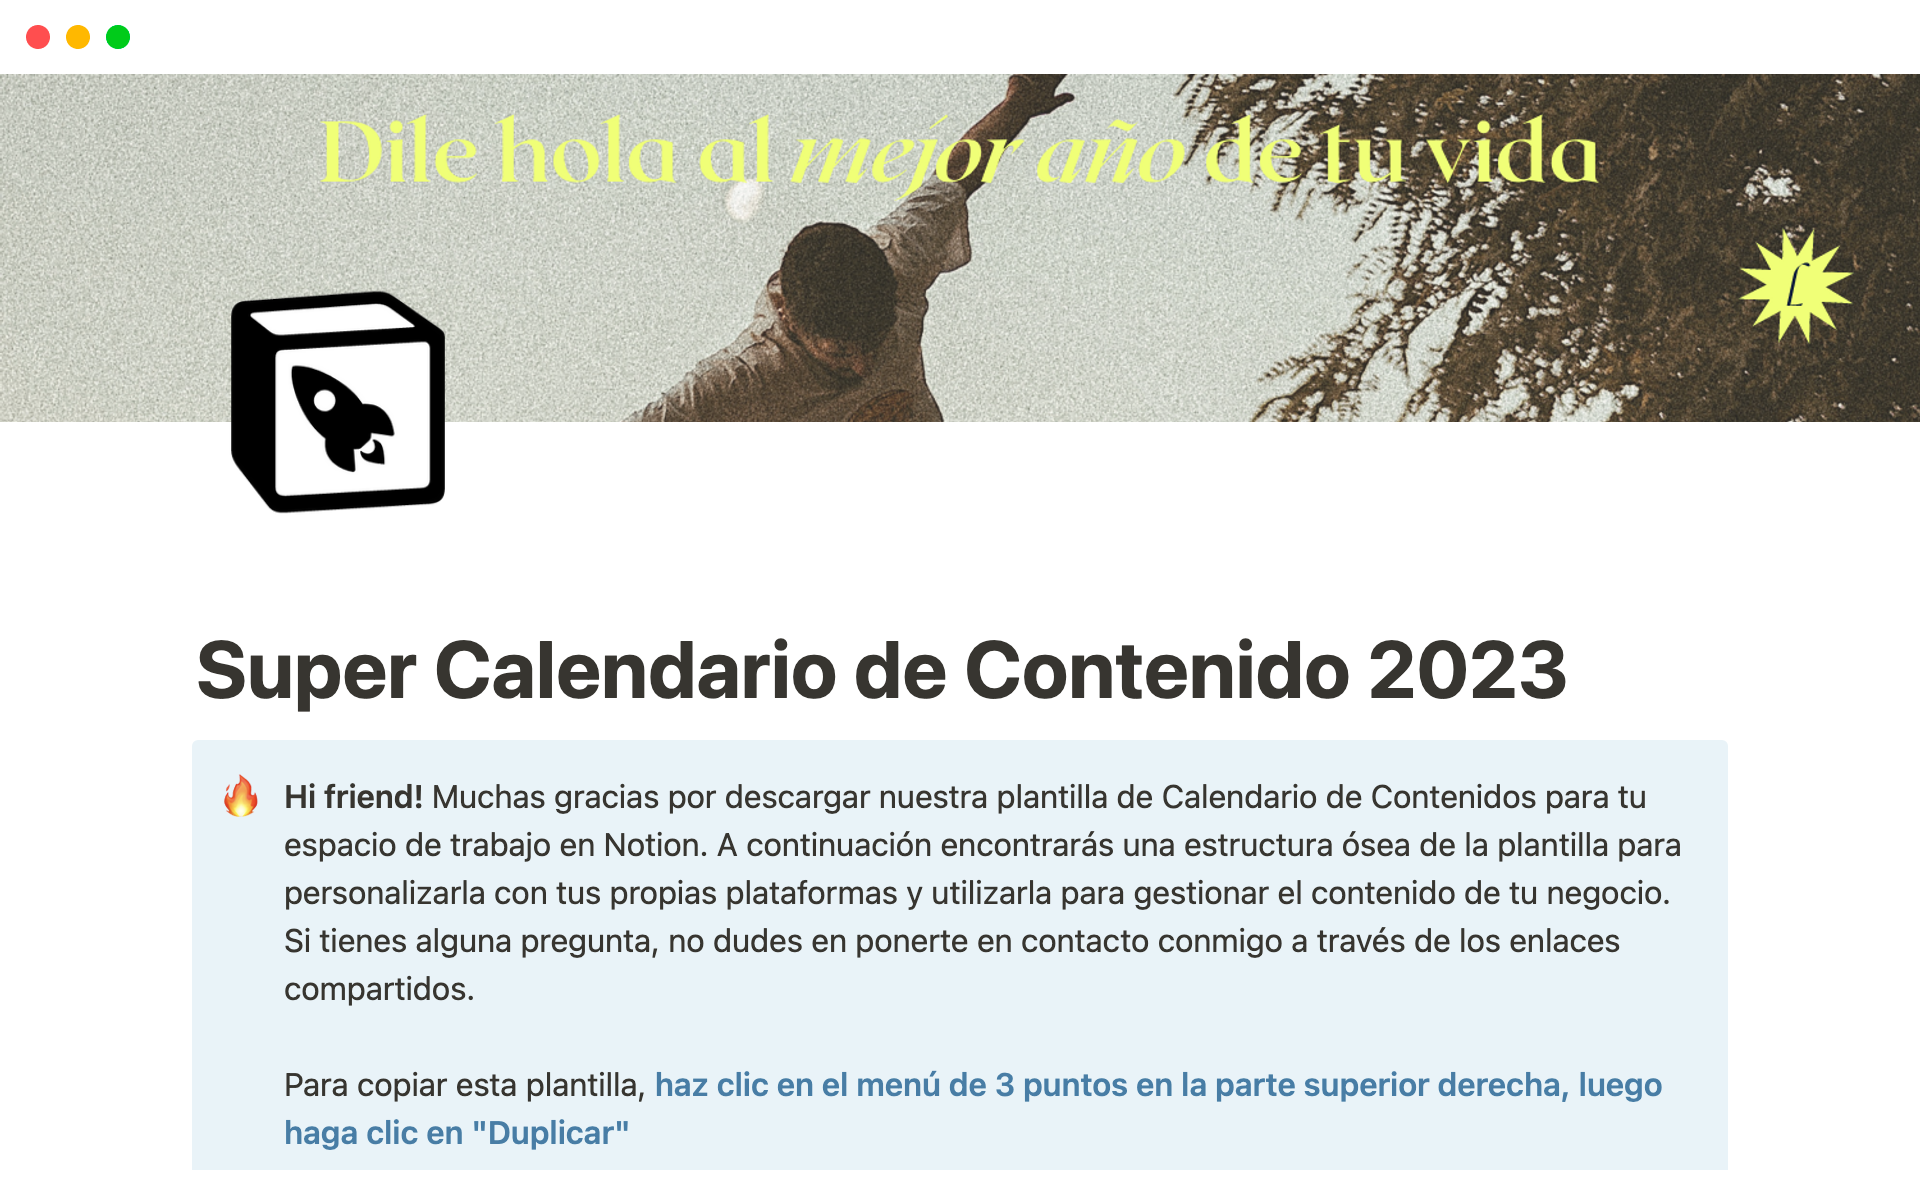 Aperçu du modèle de Super Calendario de Contenido 2023 en Notion